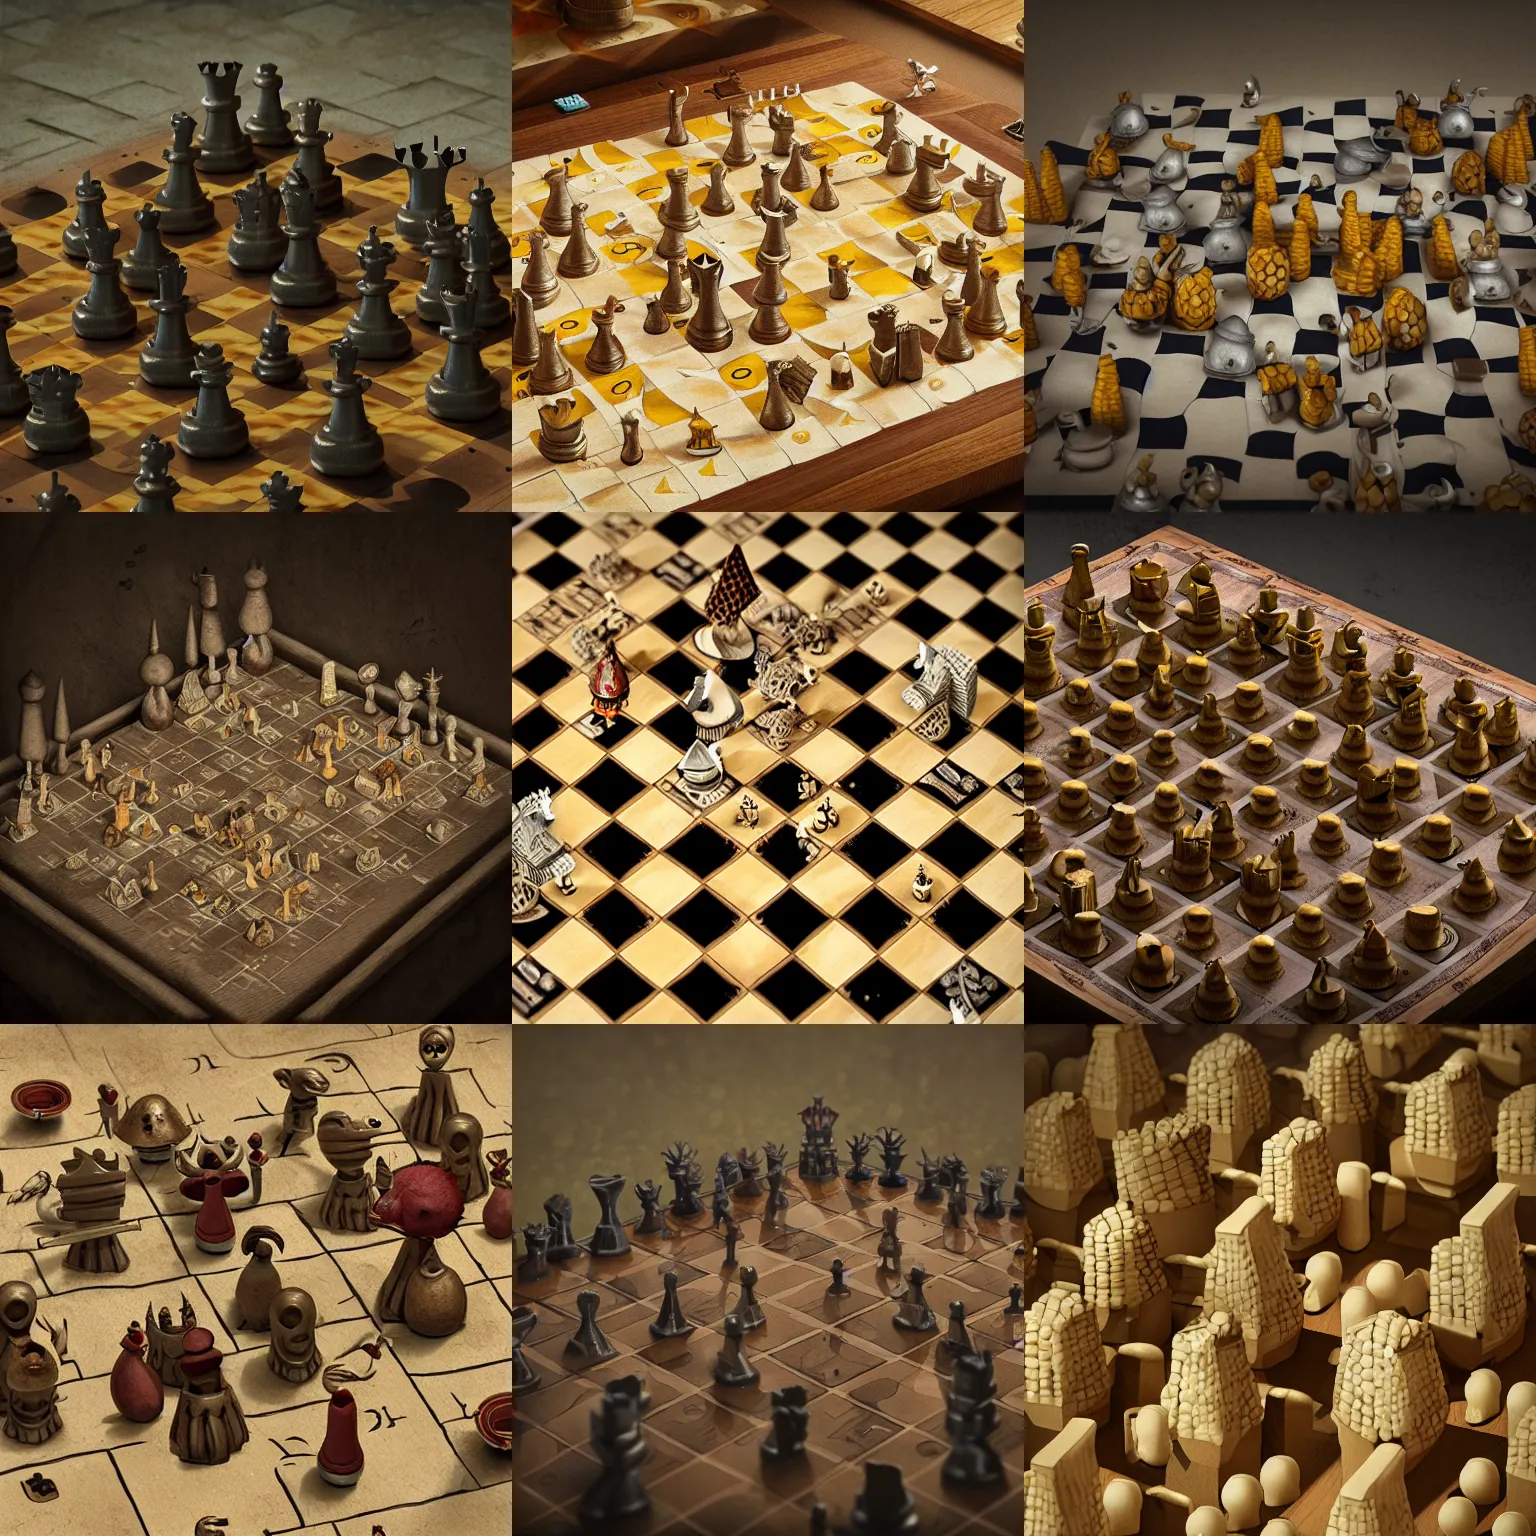 Prompt: corn chess board game by shaun tan, style of john kenn mortensen, gipf project, detailed octane render